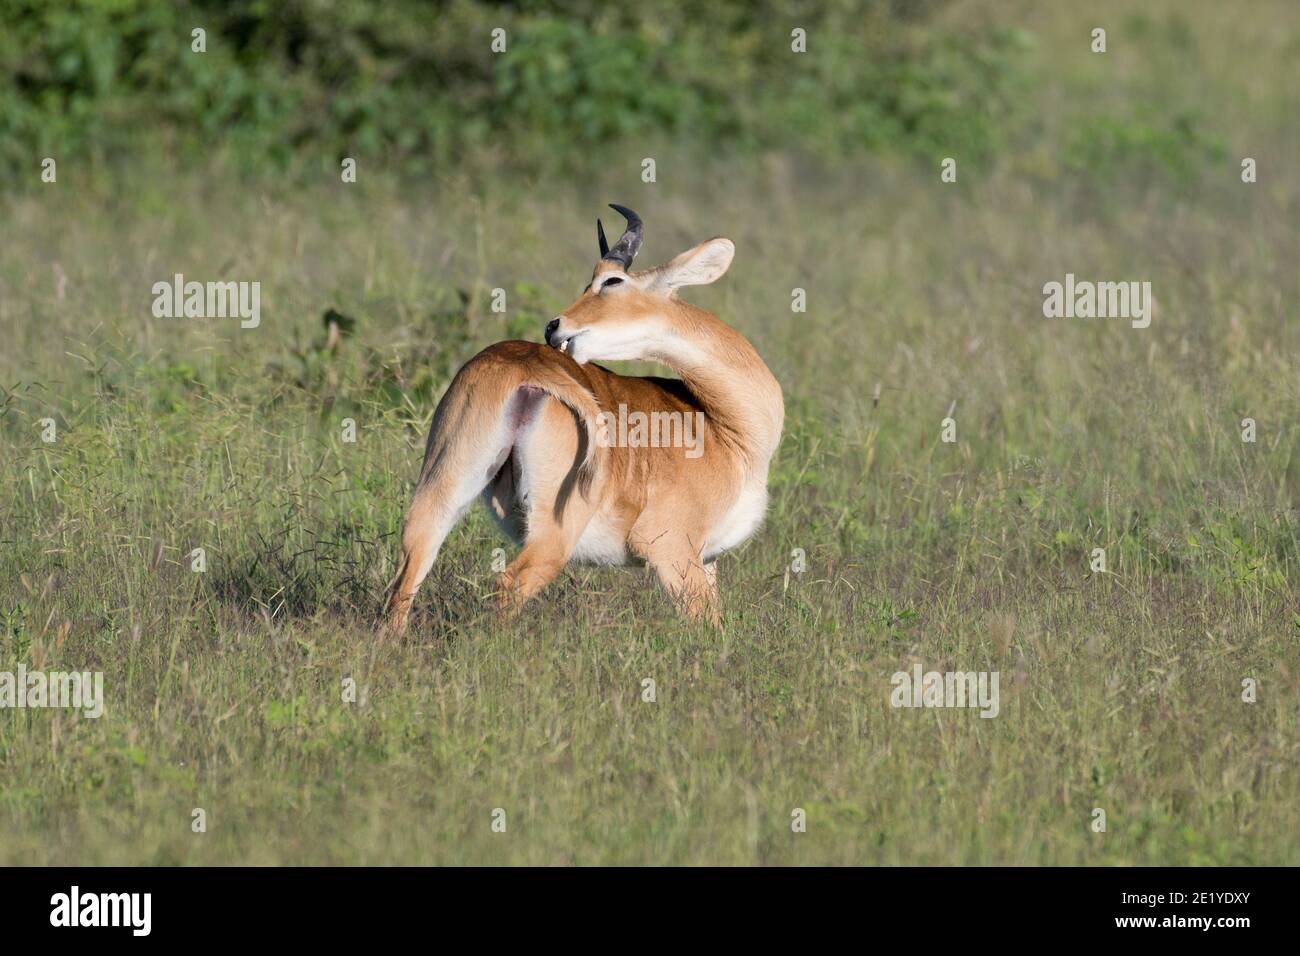 A male Puku antelope (Kobus vardonii) grooming itself in typical grassland habitat, Chobe National Park, Botswana, Africa. Stock Photo